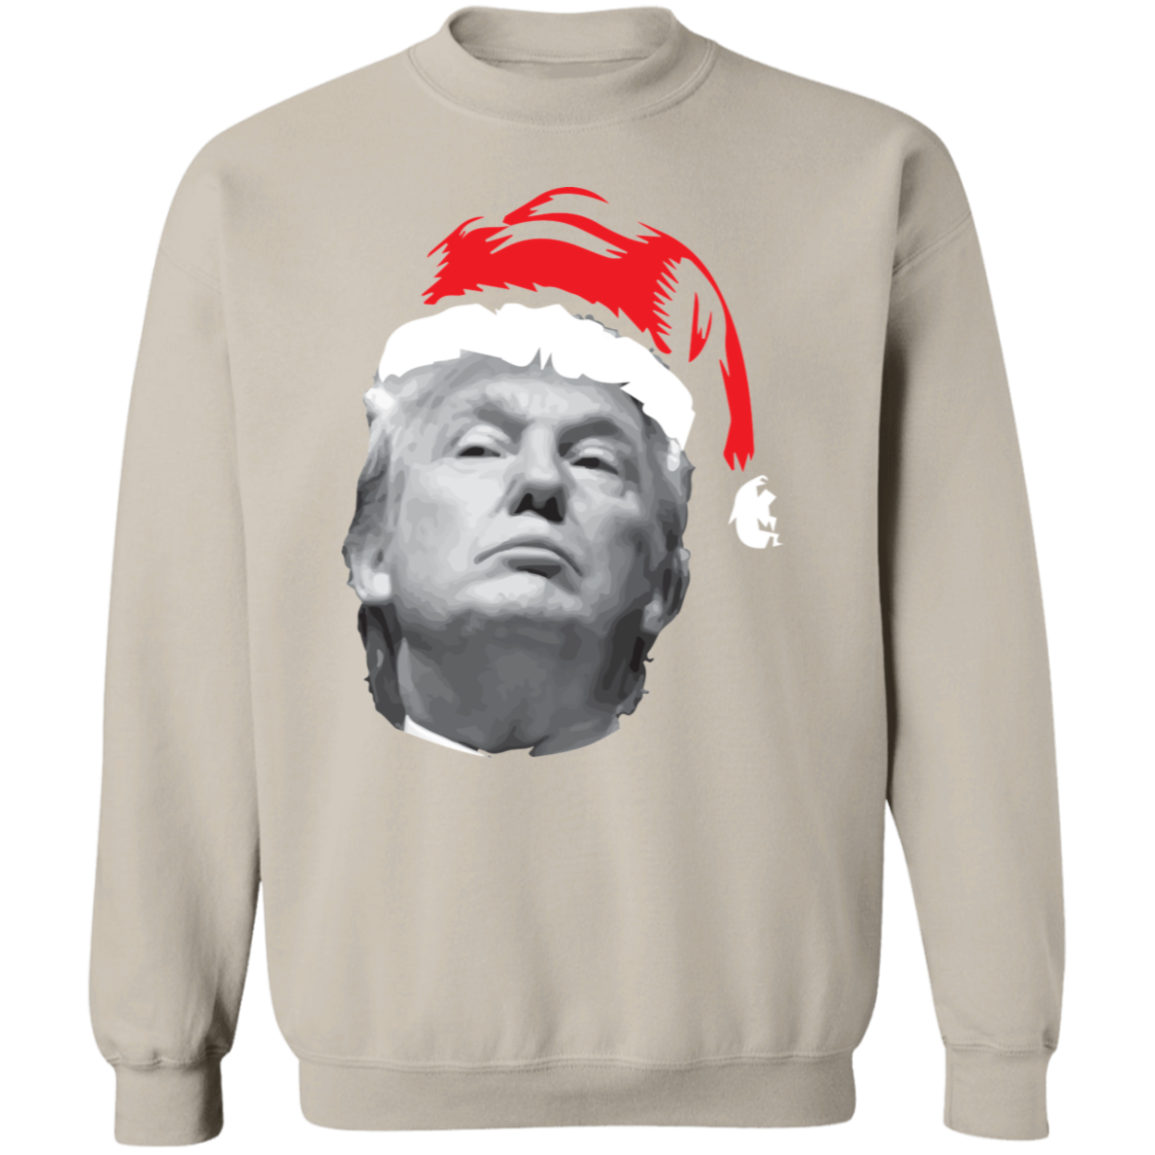 Trump Christmas Sweatshirt